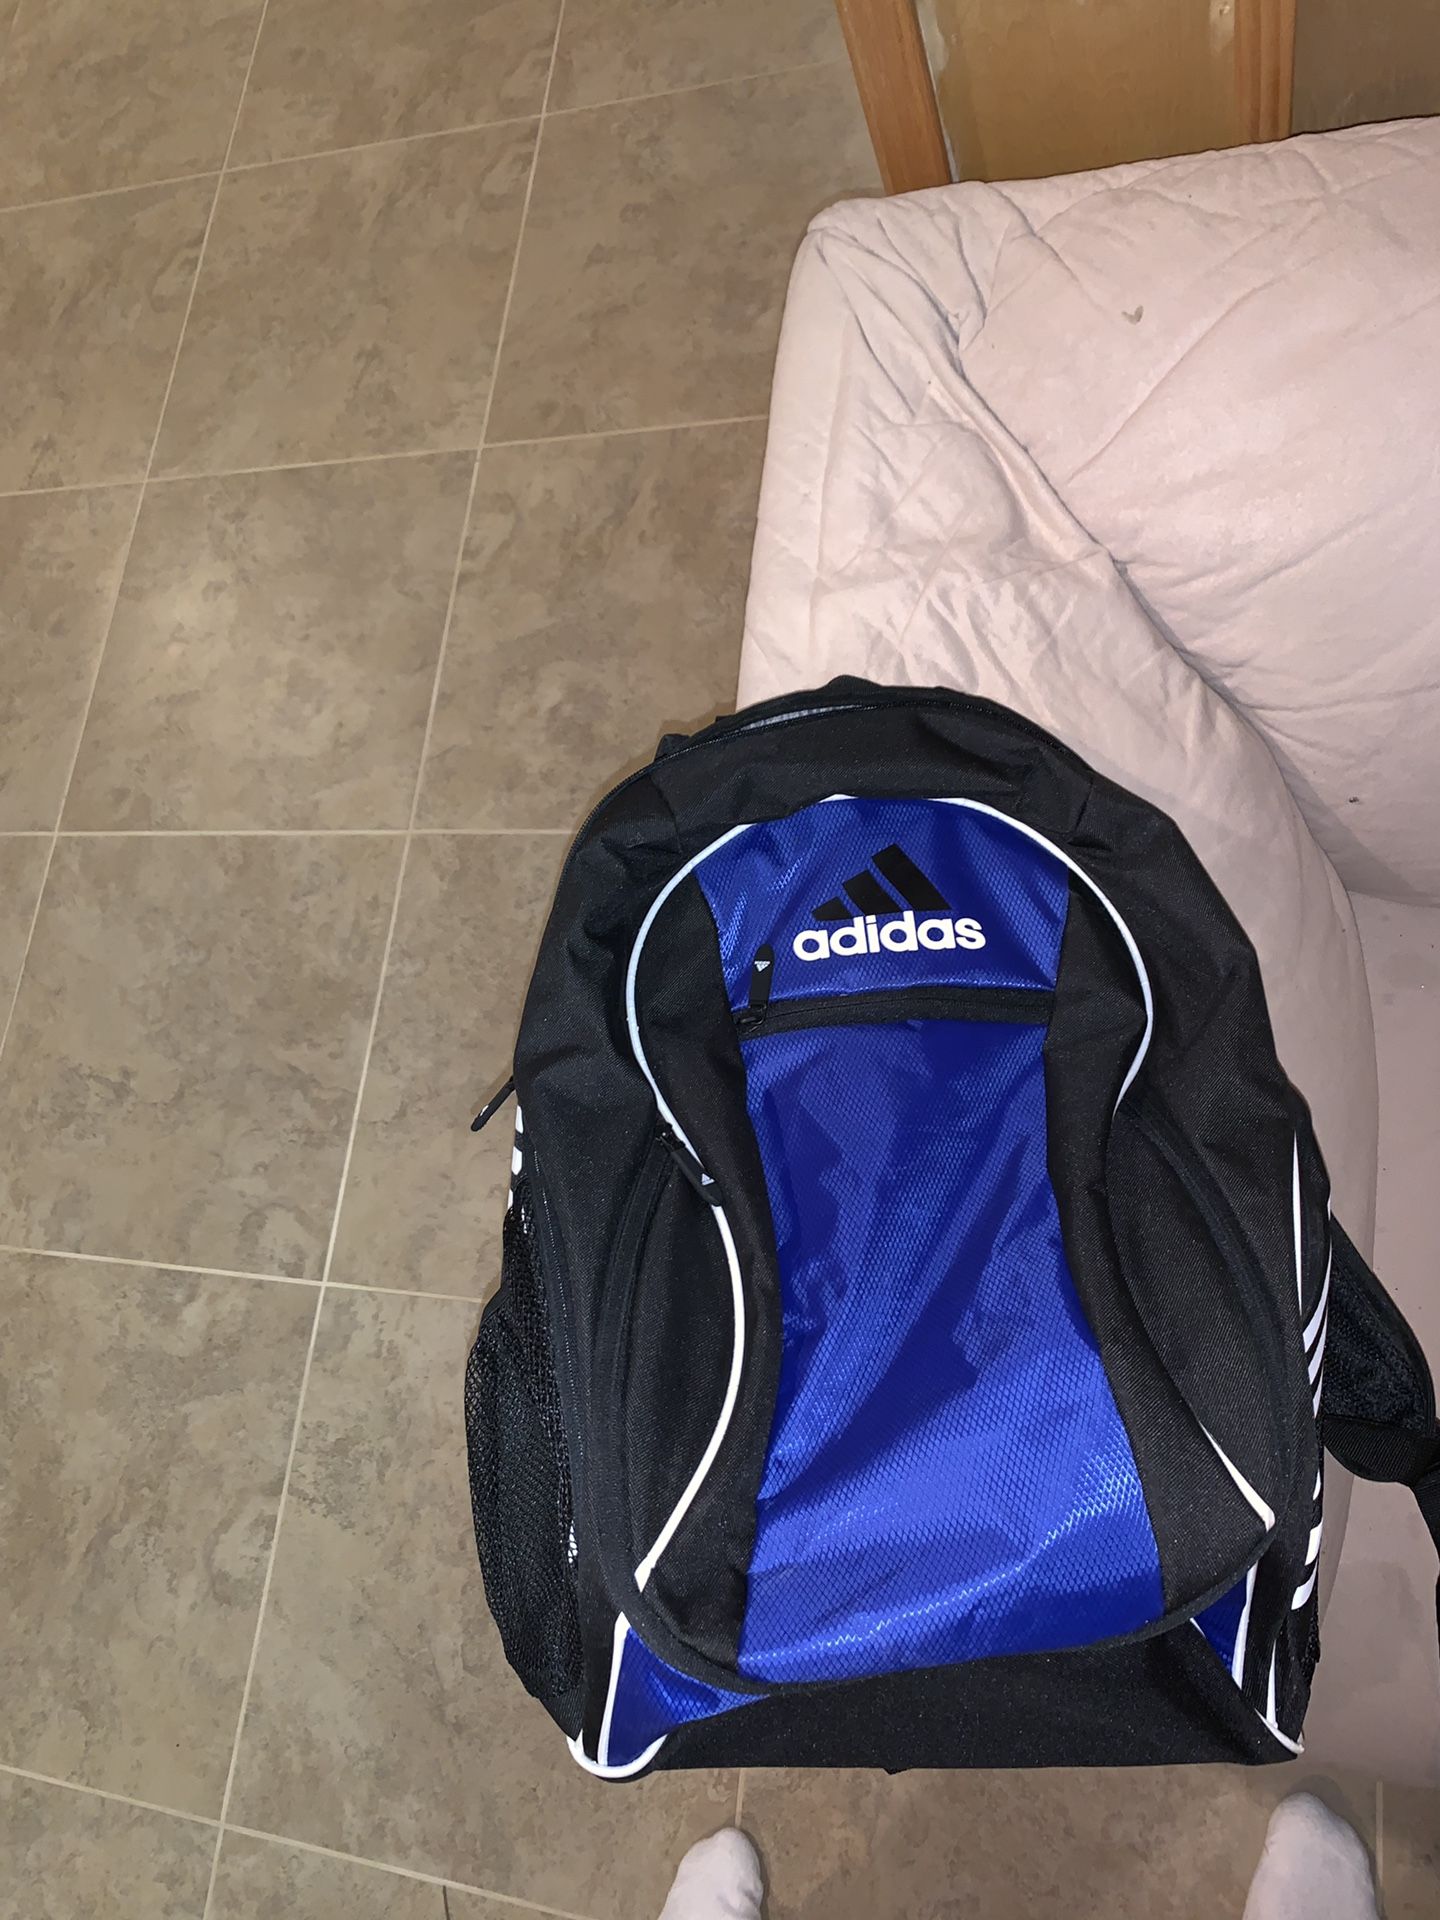 Adidas Blue/Black Backpack